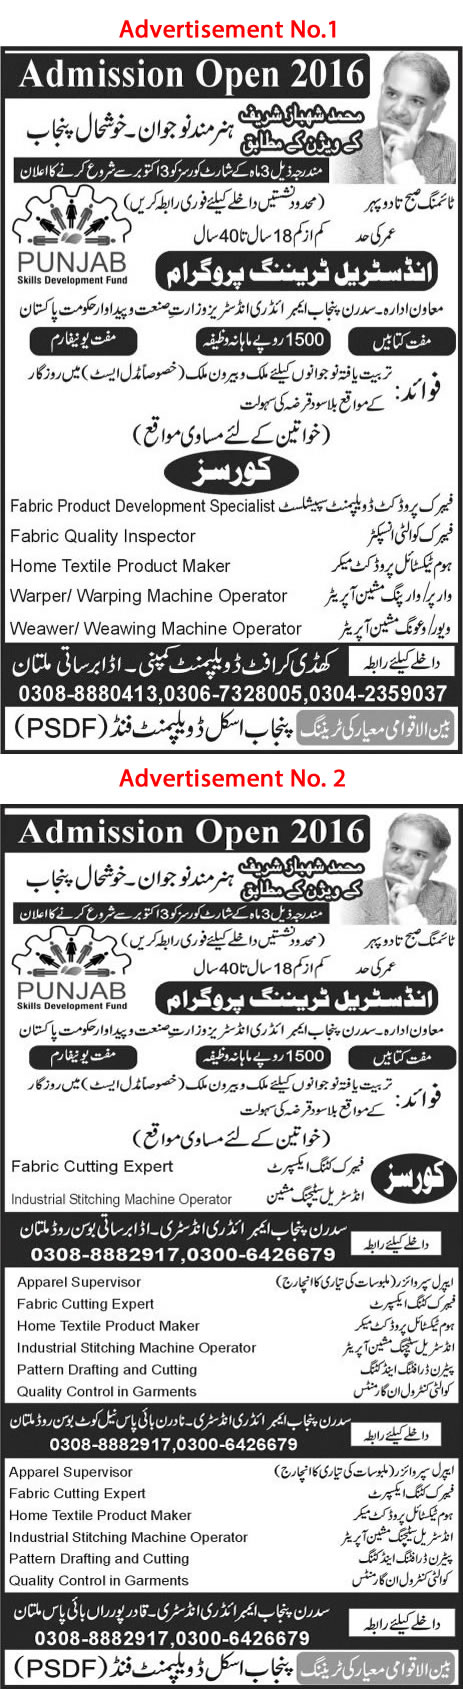 PSDF Free Courses in Multan September 2016 Punjab Skill Development Fund Latest